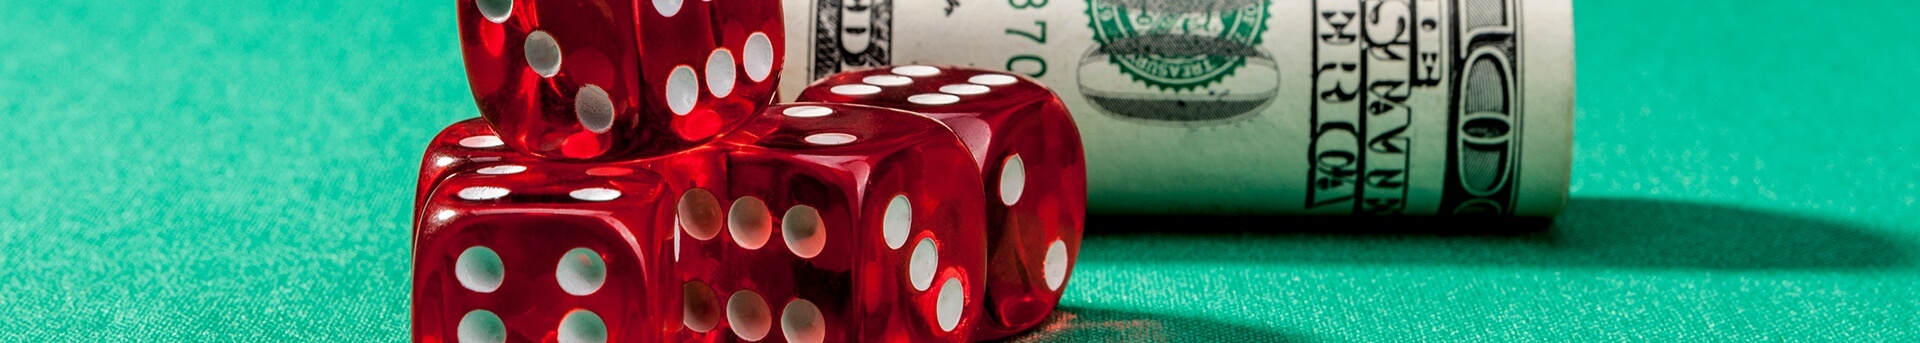 best dice combination at casinos